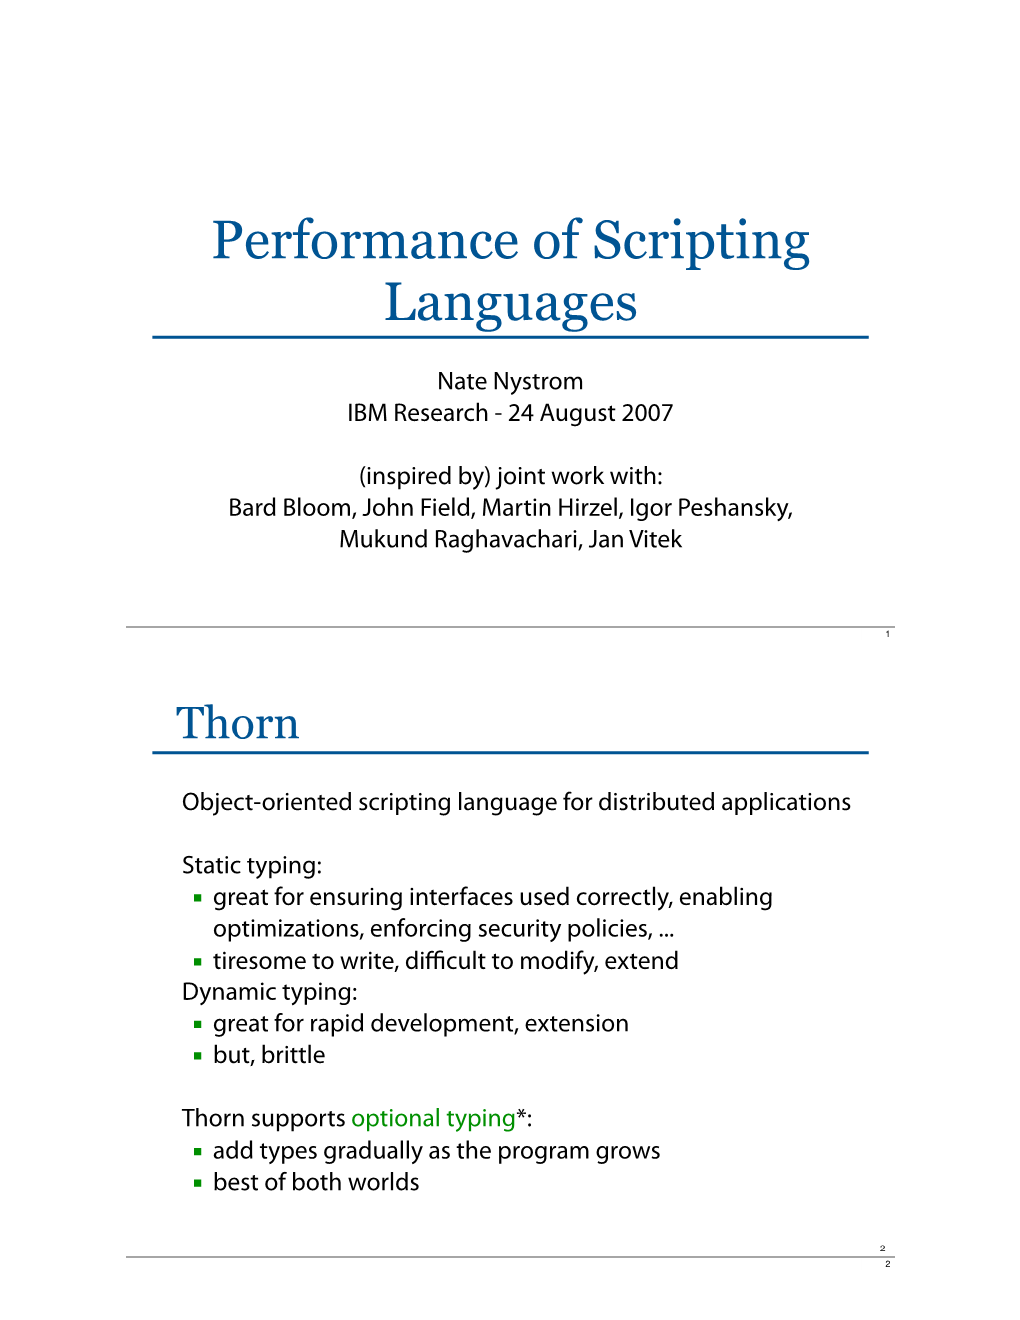 Performance of Scripting Languages